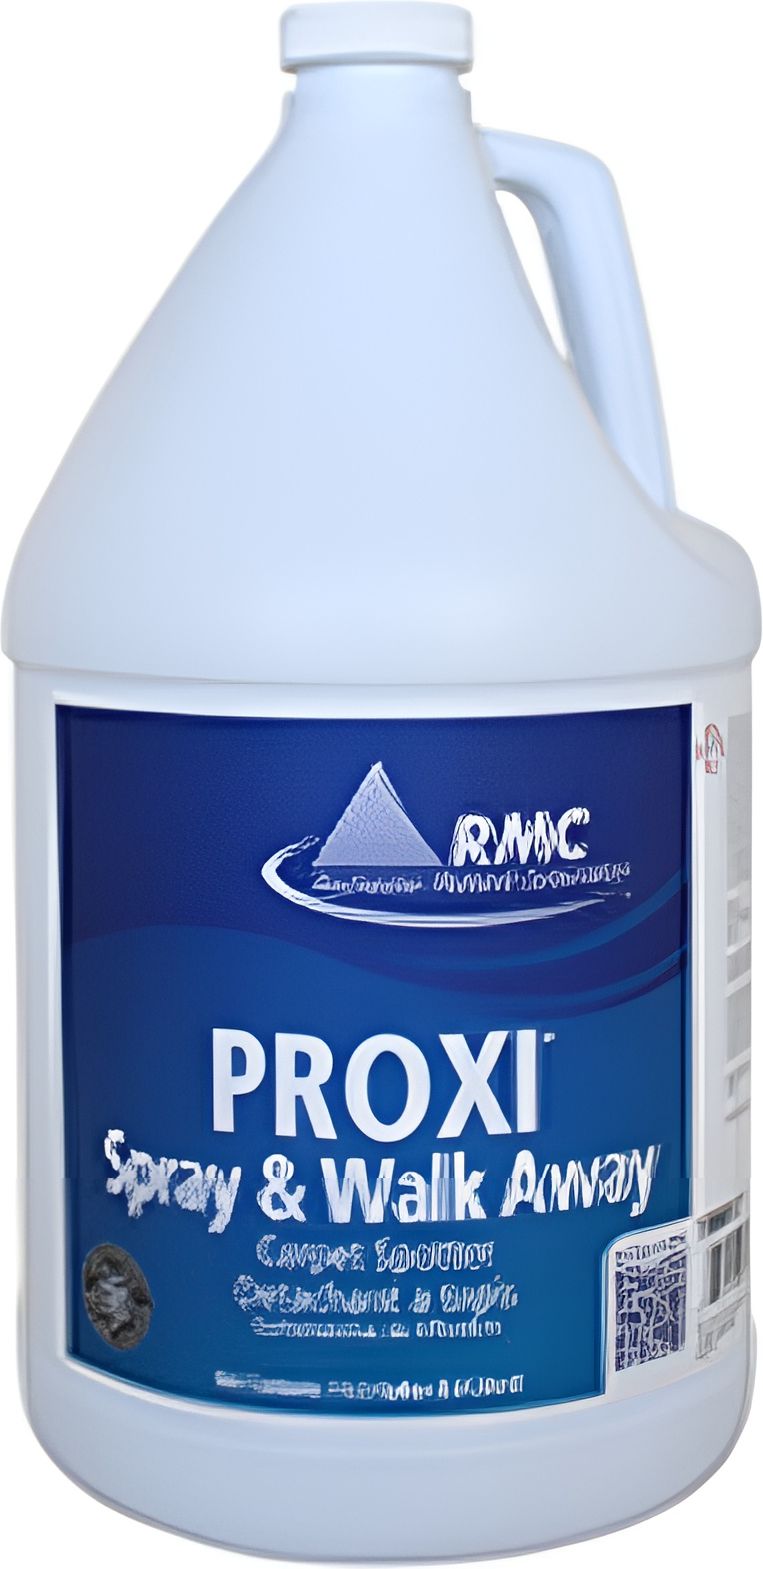 Rochester Midland - 3.8L Proxi Fabric Clean Spray & Walk Away, 4Jug/Cs - 11849327